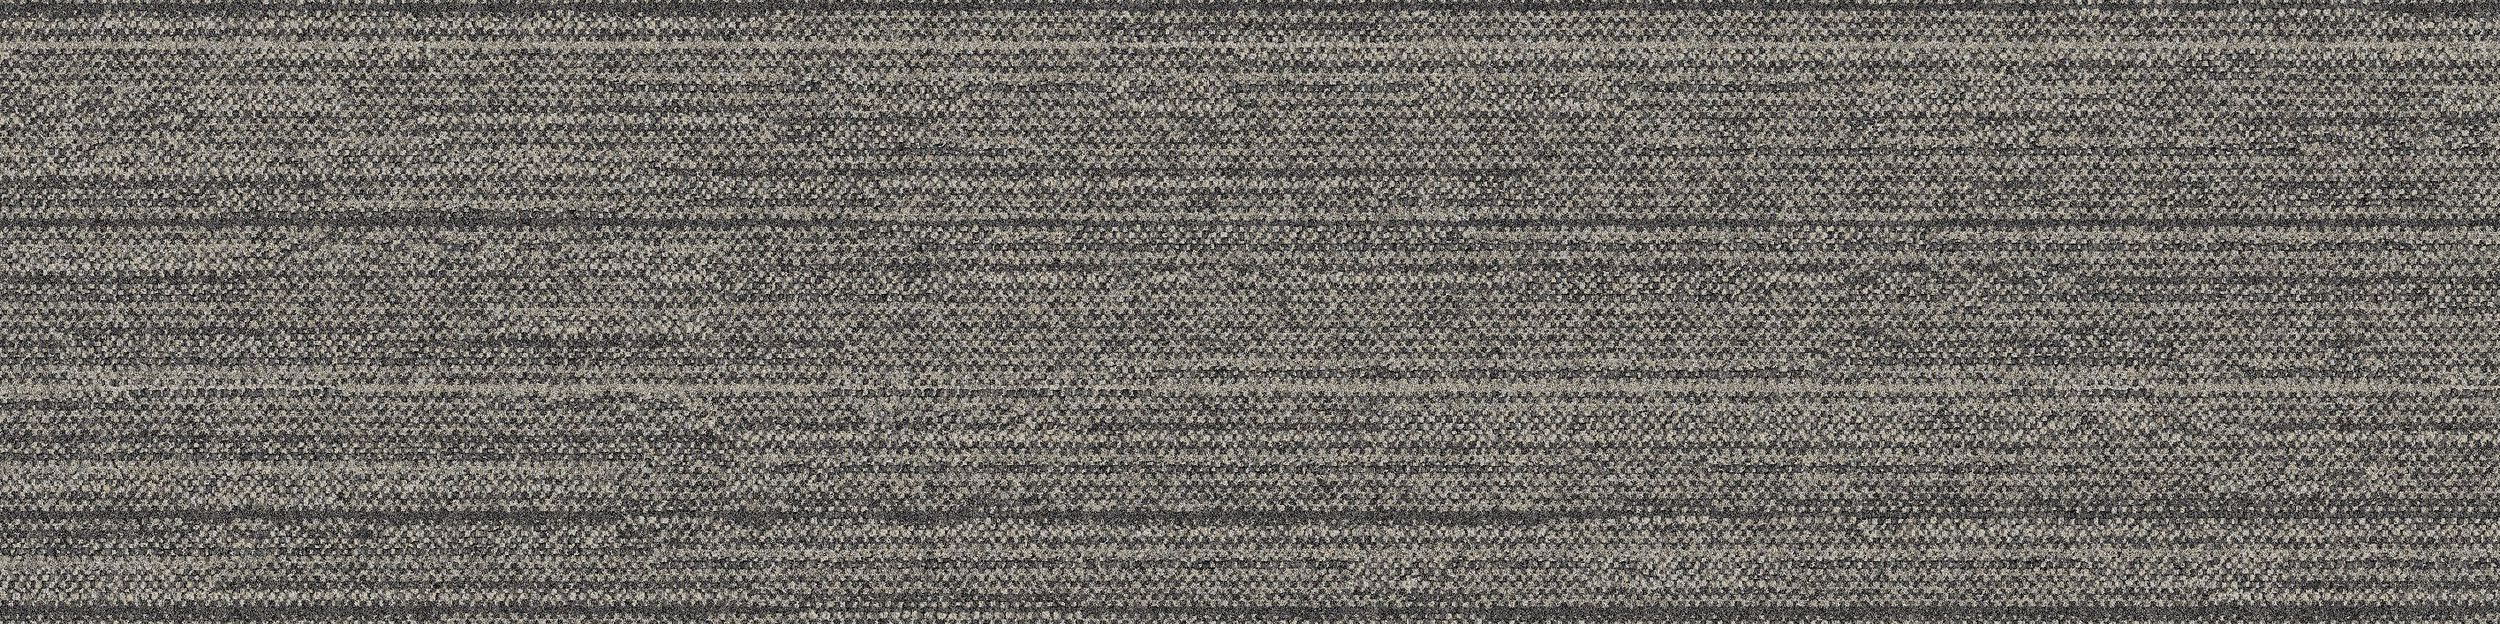 WW880 Carpet Tile In Natural Loom afbeeldingnummer 2